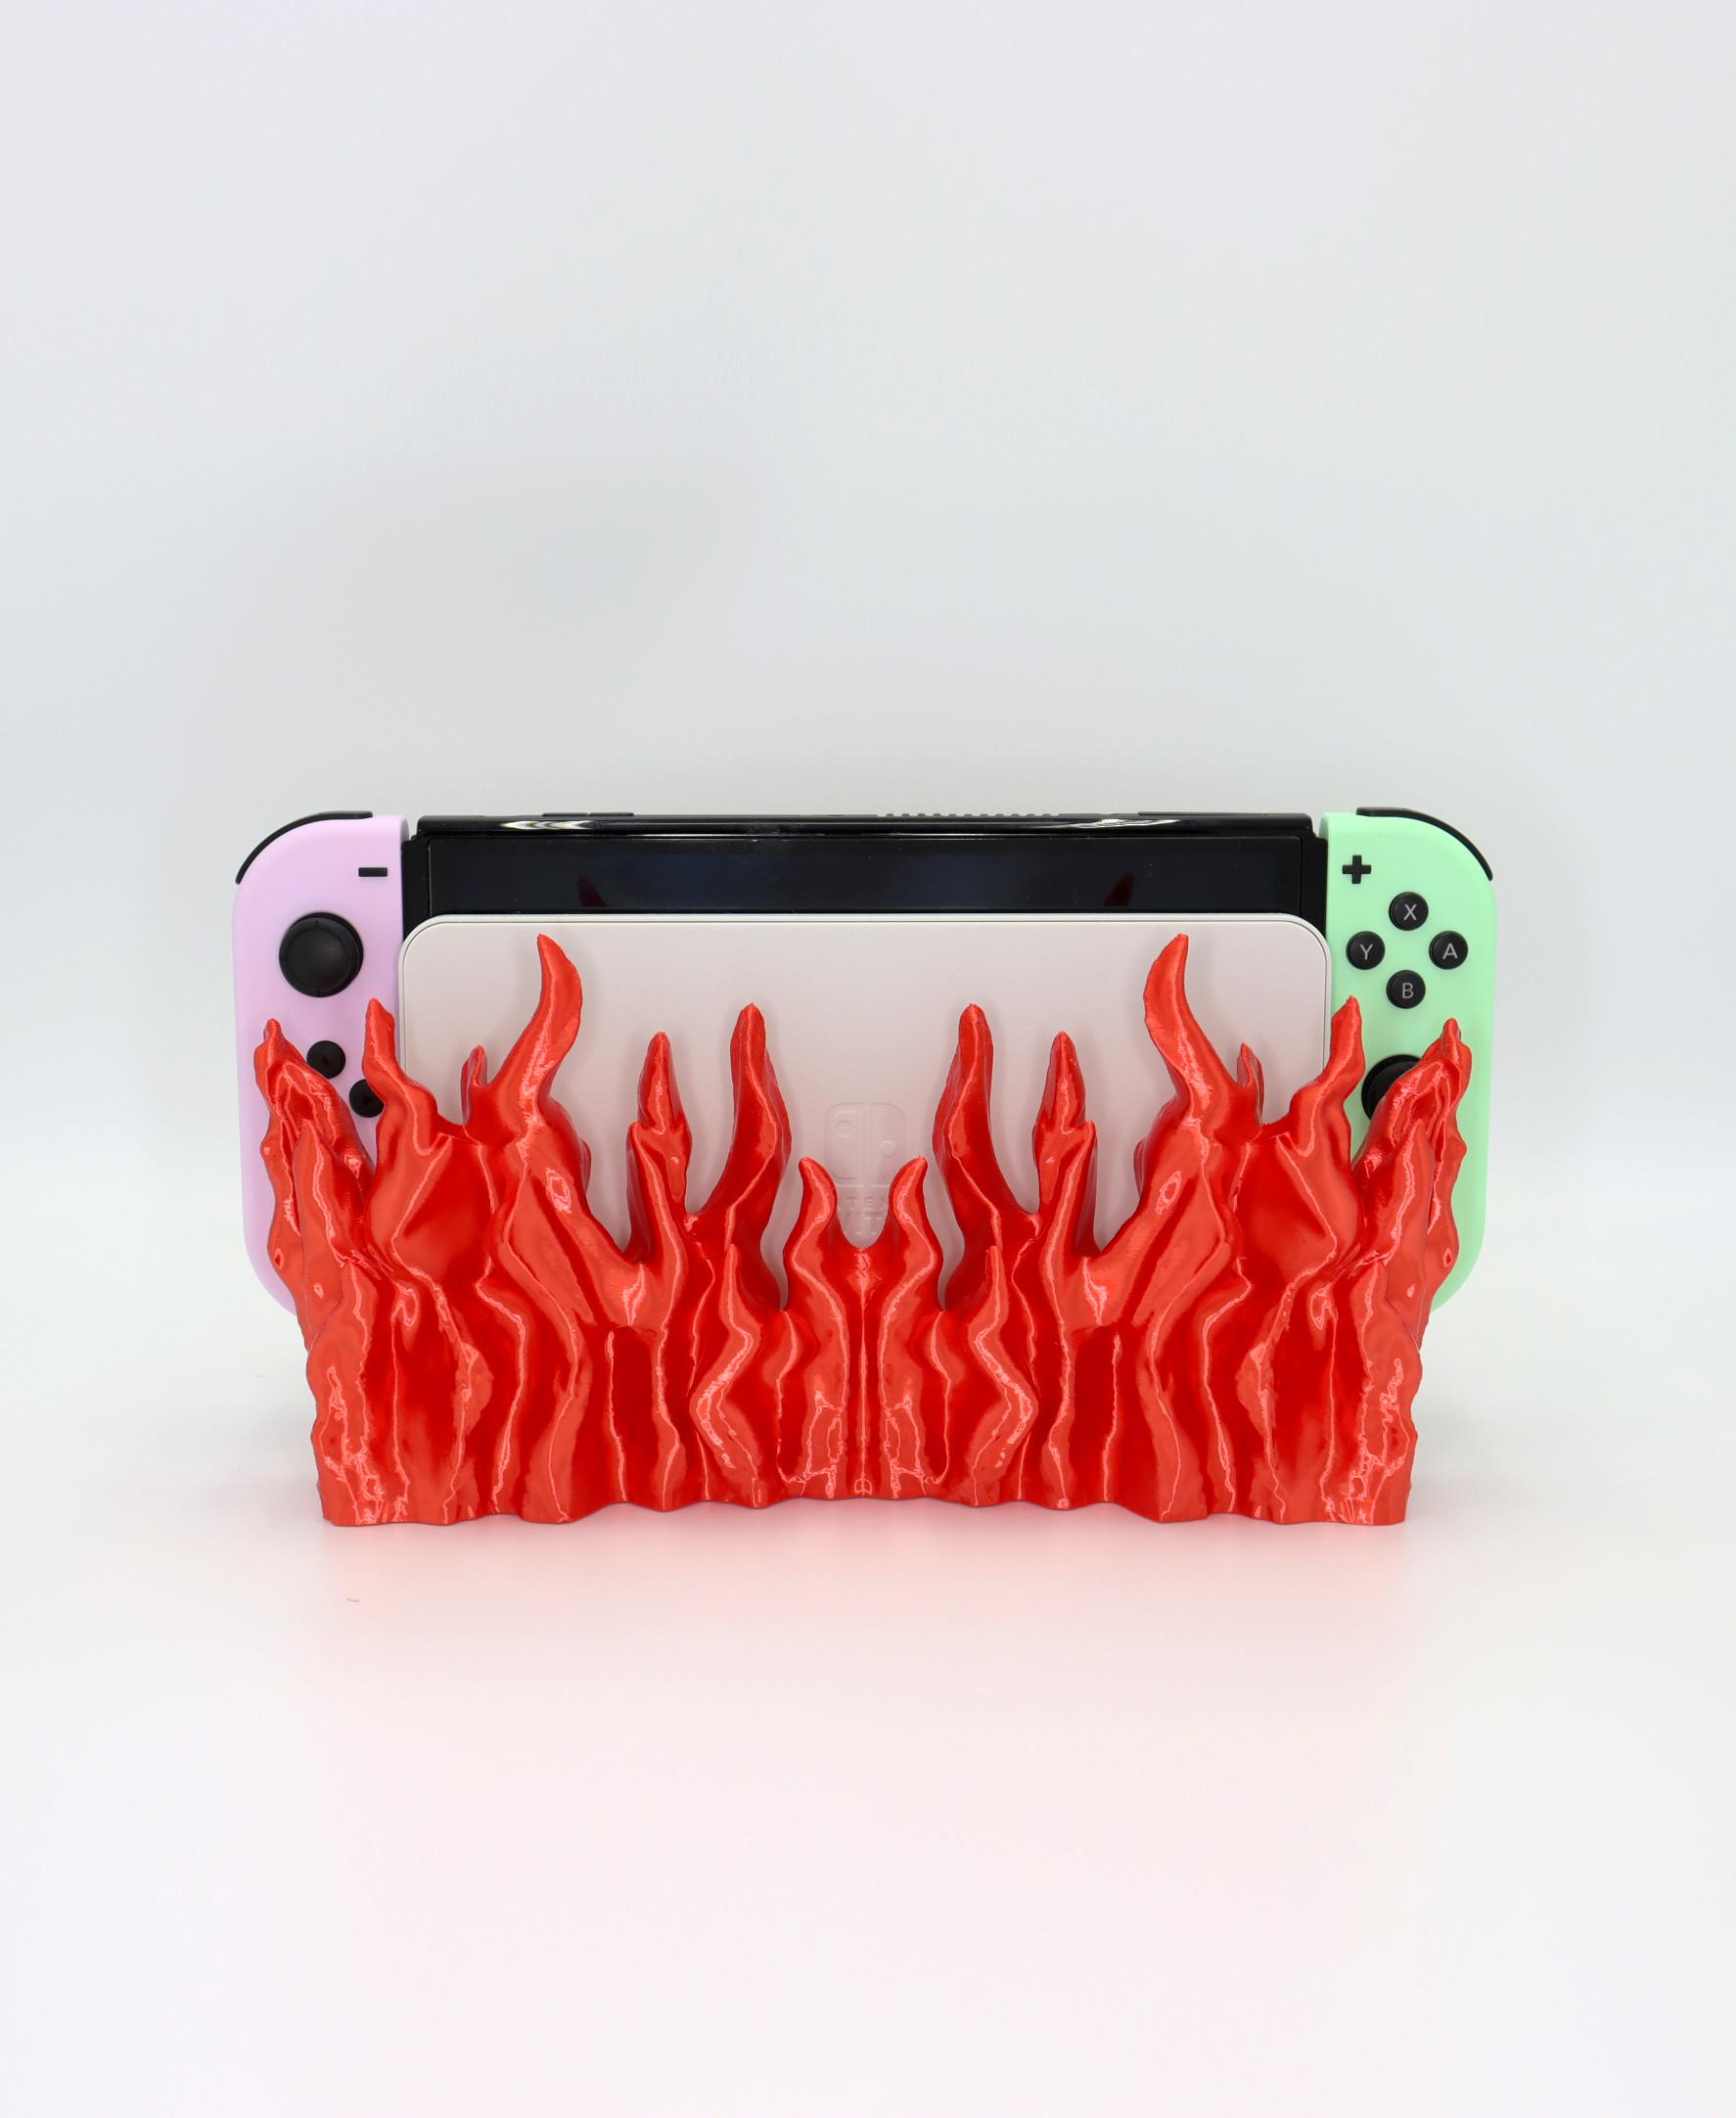 Flame Nintendo switch dock 3d model